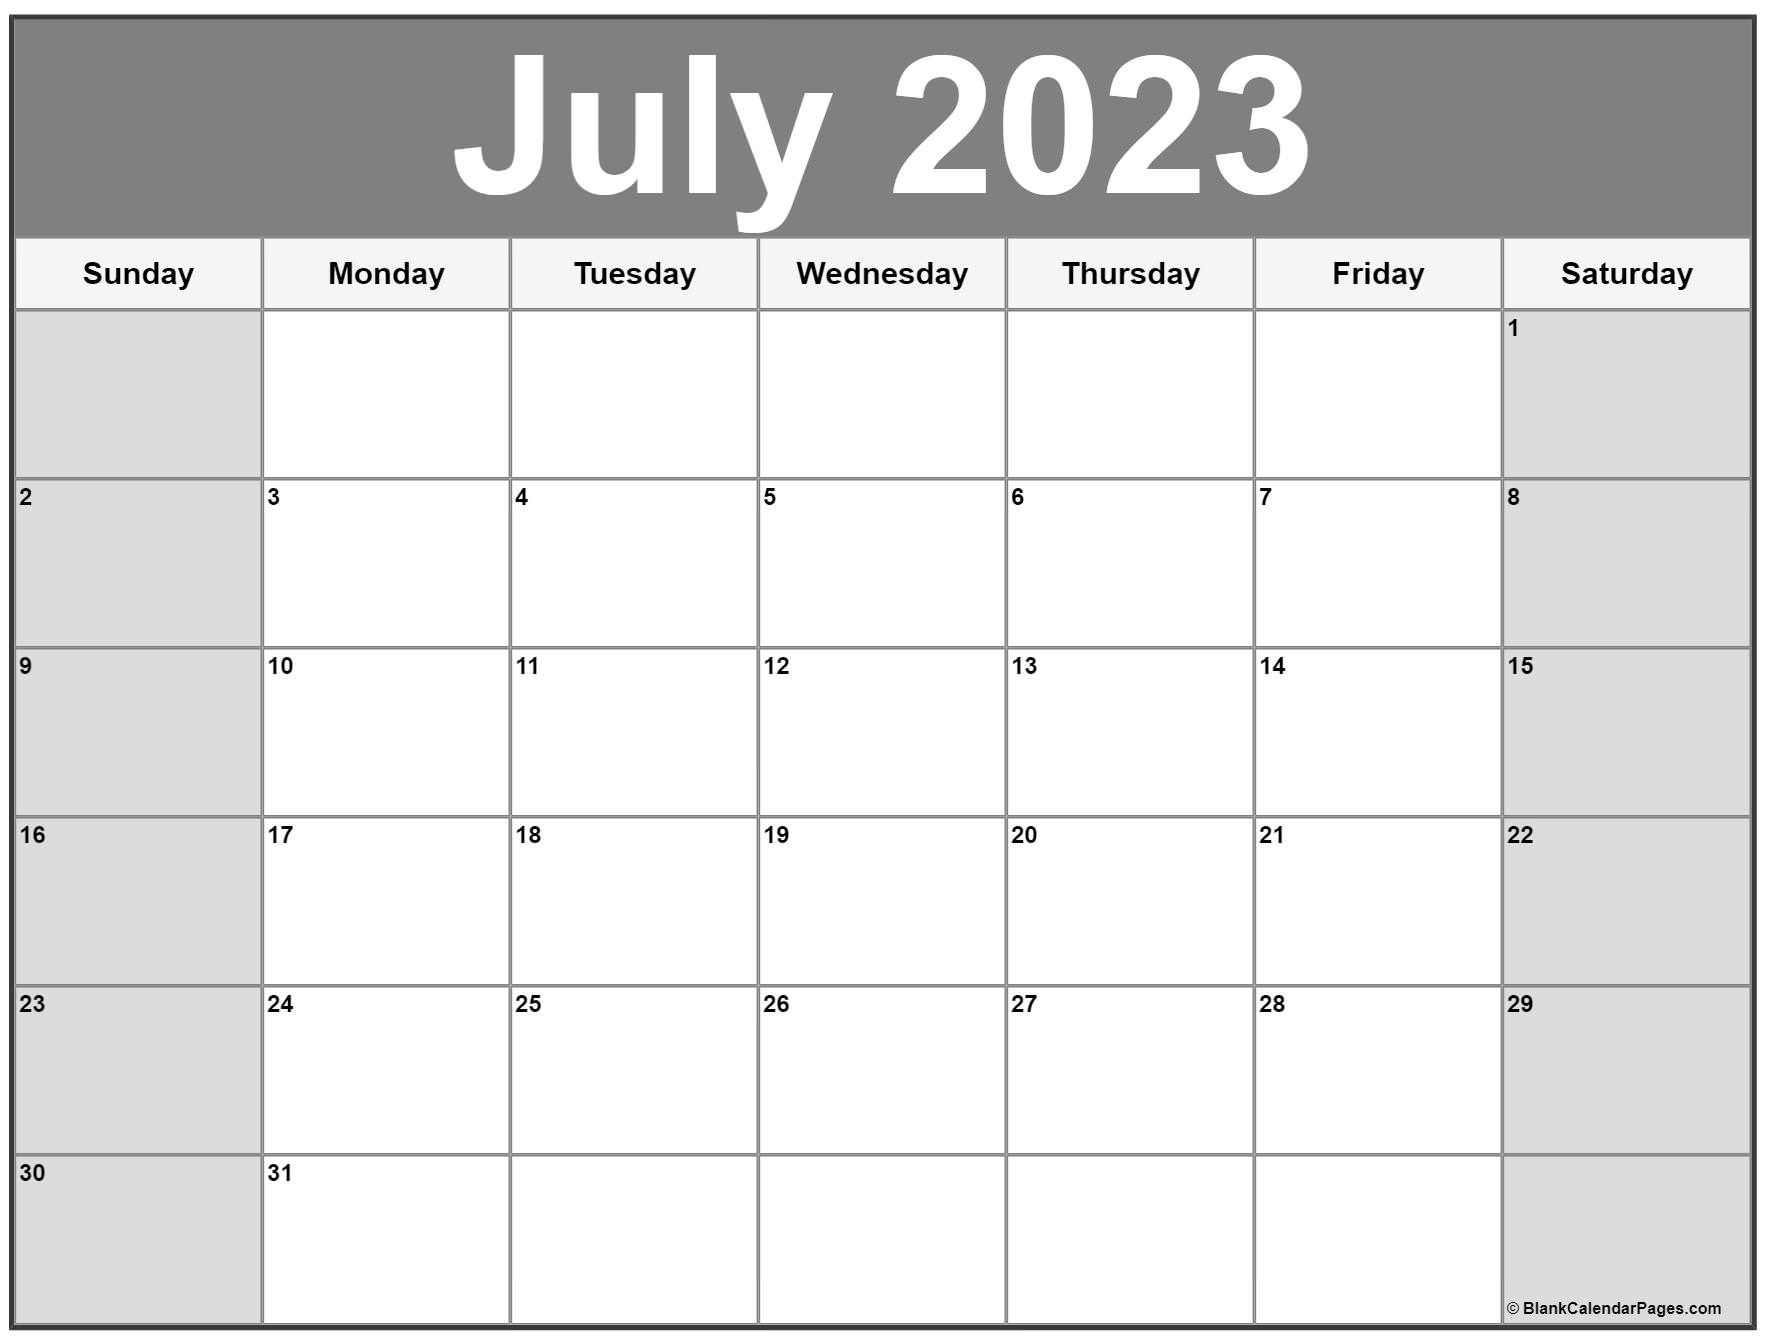 daily-calendar-2023-july-dailycalendars